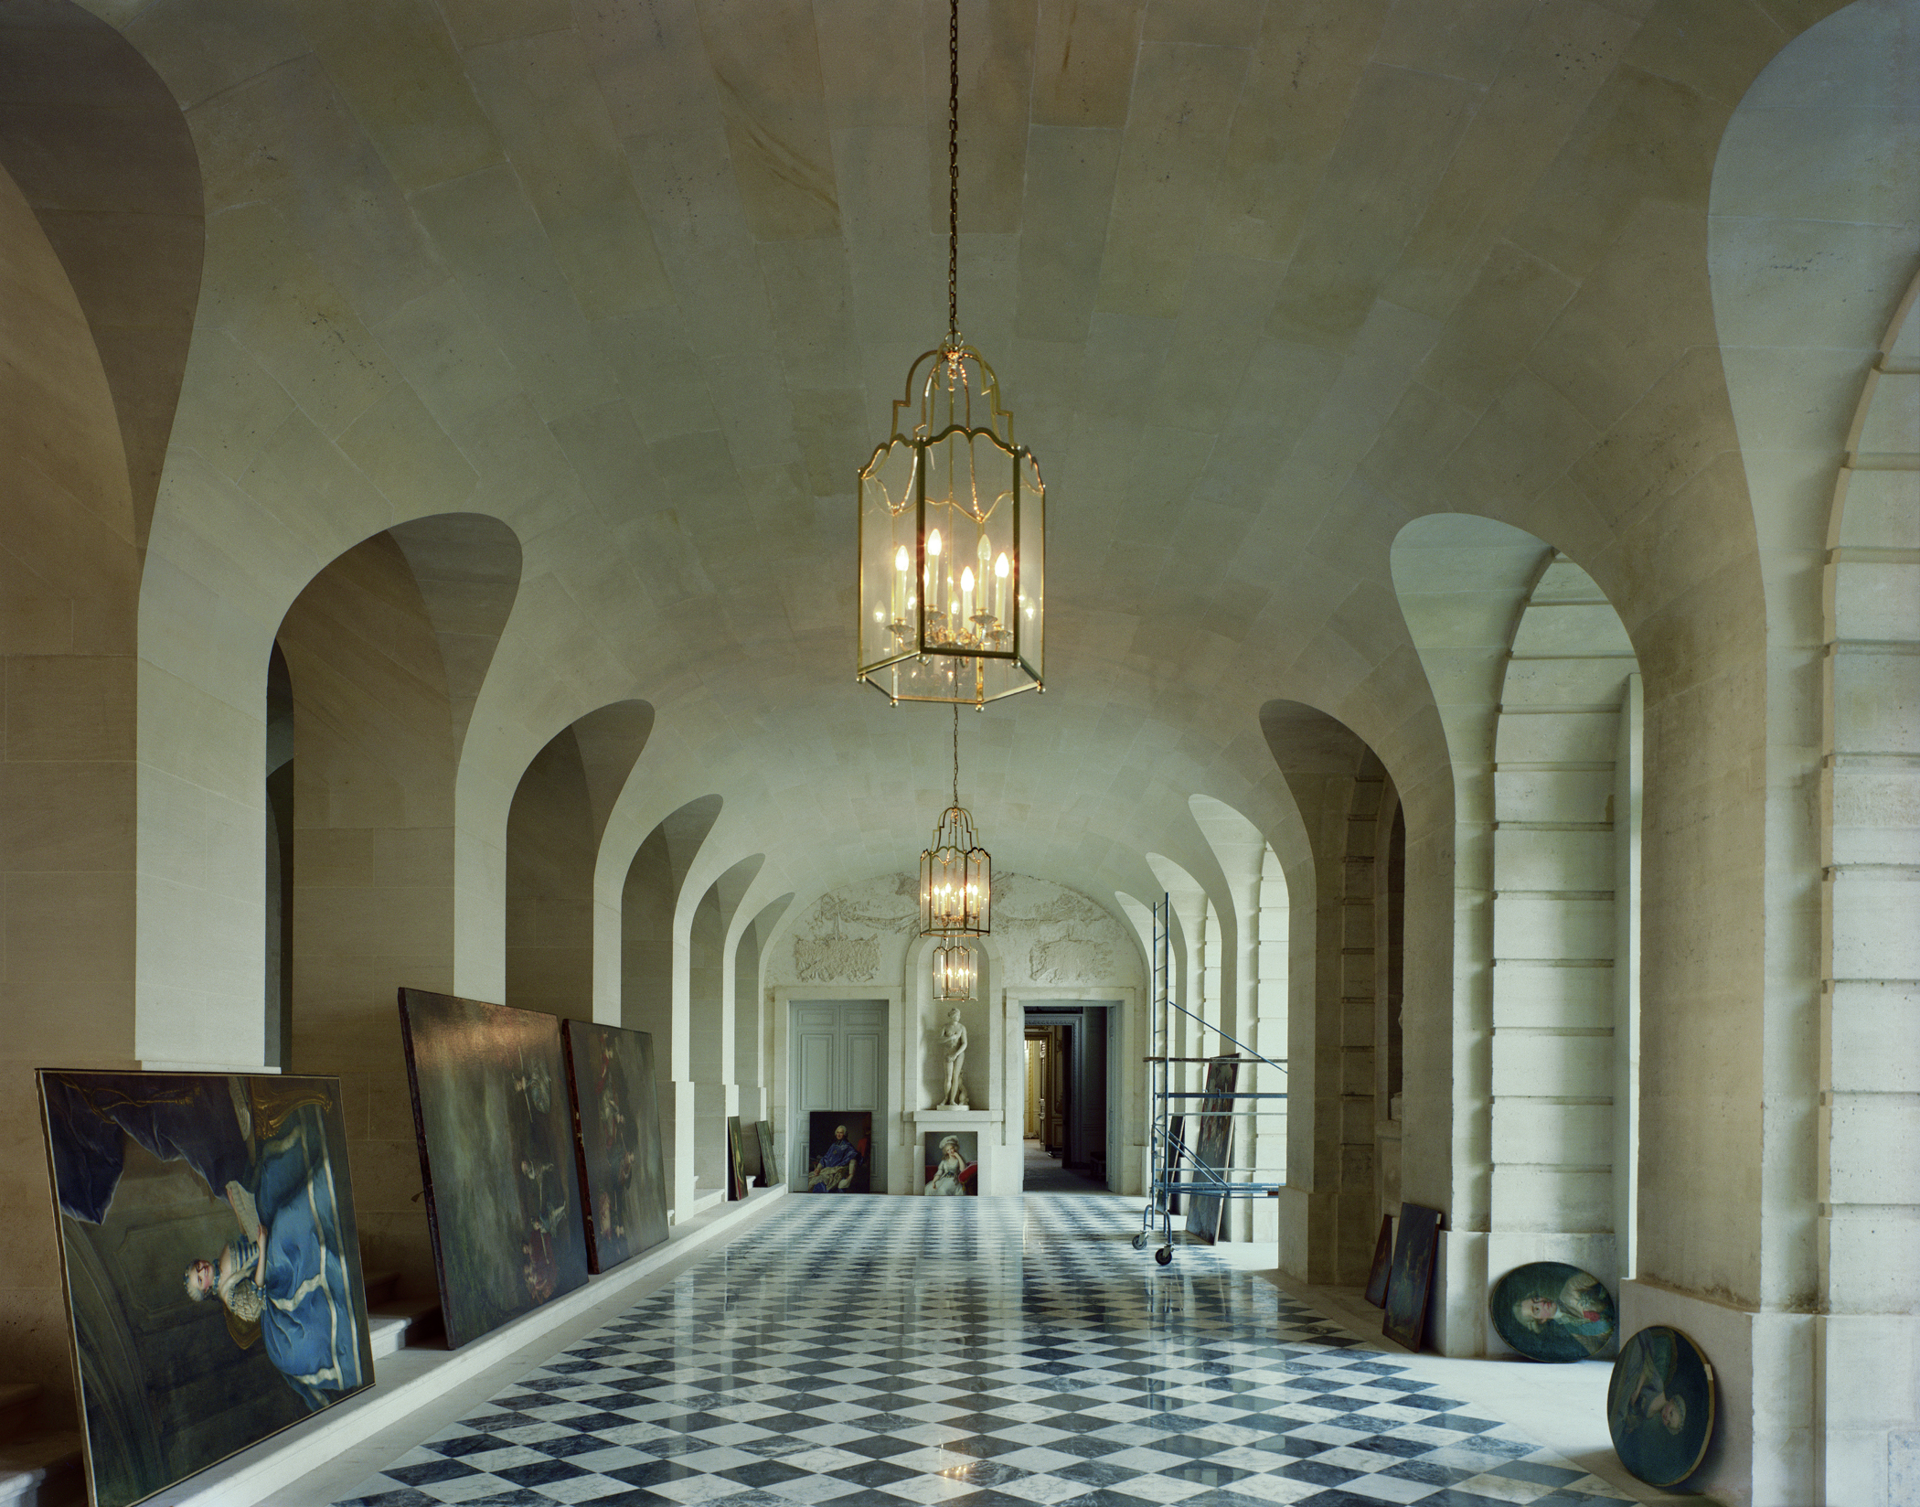 Galerie Basse, Versailles\3/10 by Robert Polidori